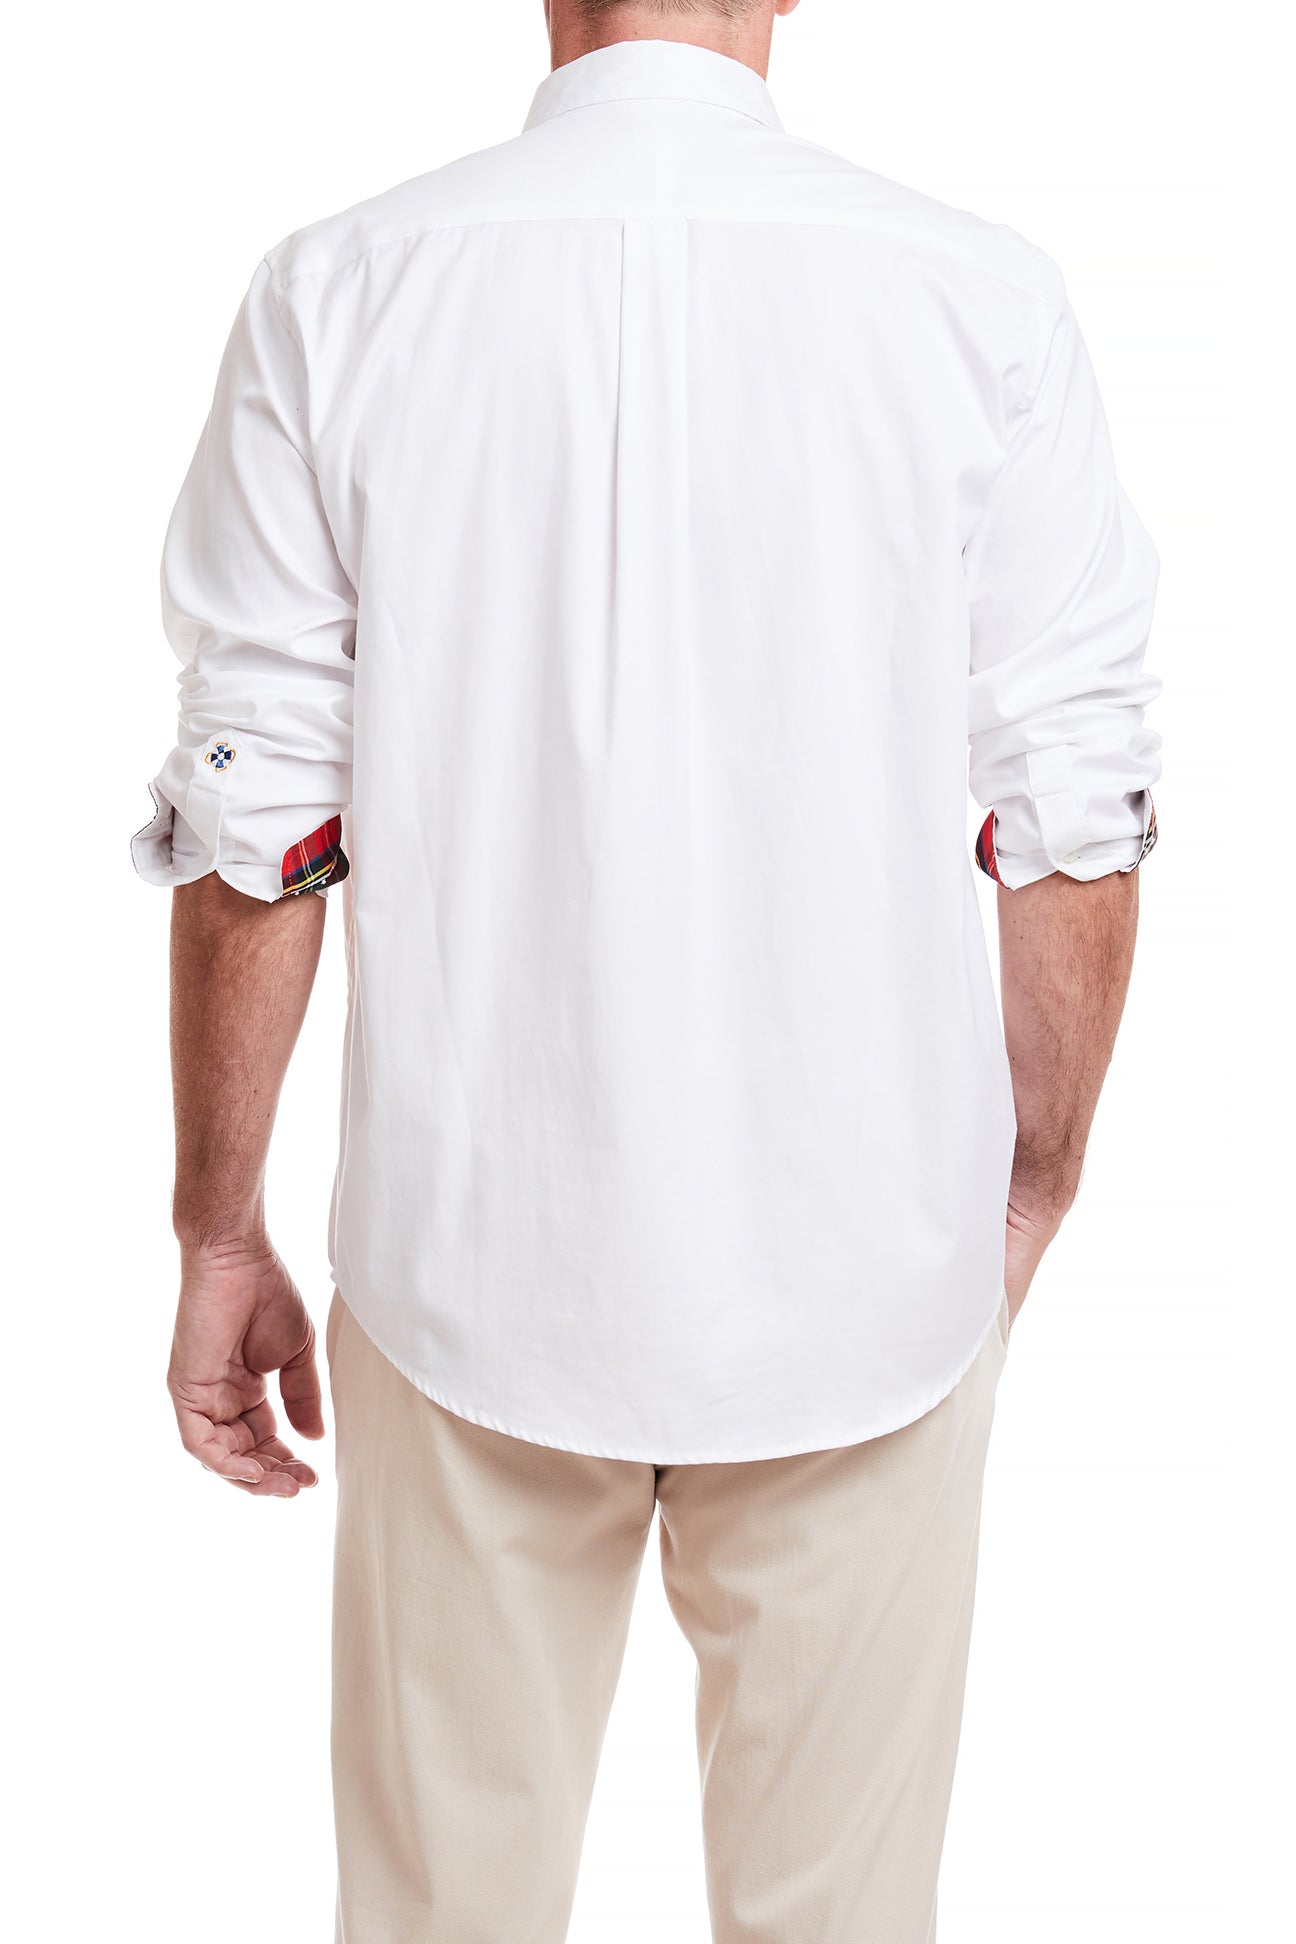 Chase Shirt White Oxford With Royal Stewart Tartan Trim MENS SPORT SHIRTS Castaway Clothing